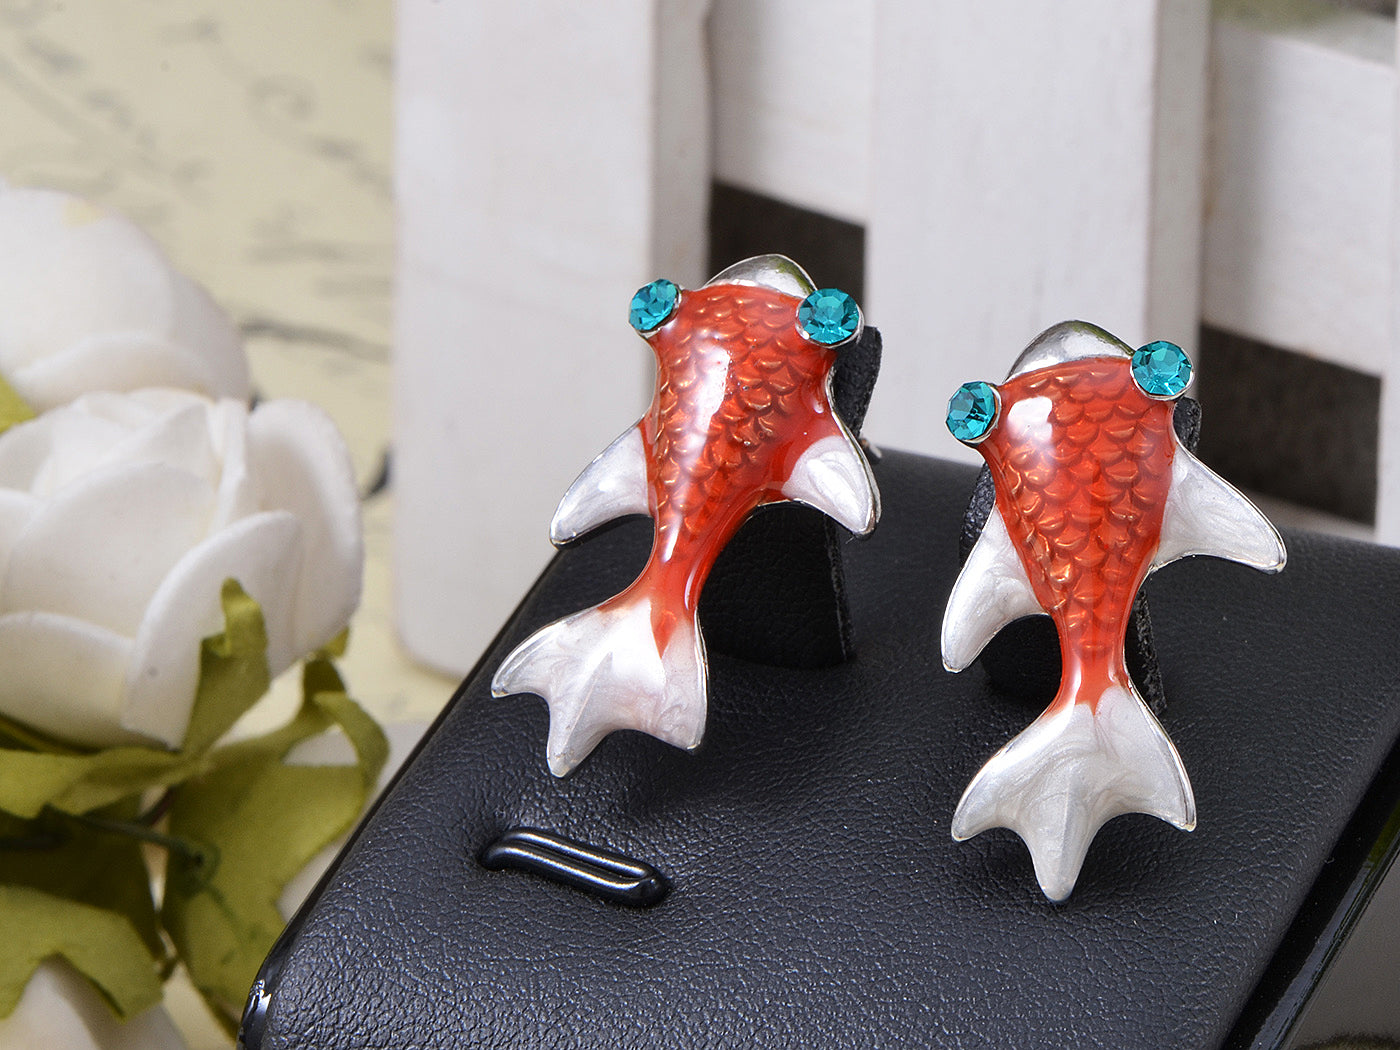 Swarovski Crystal Element Silver Red Nautical Japanese Koi Fish Stud Earrings